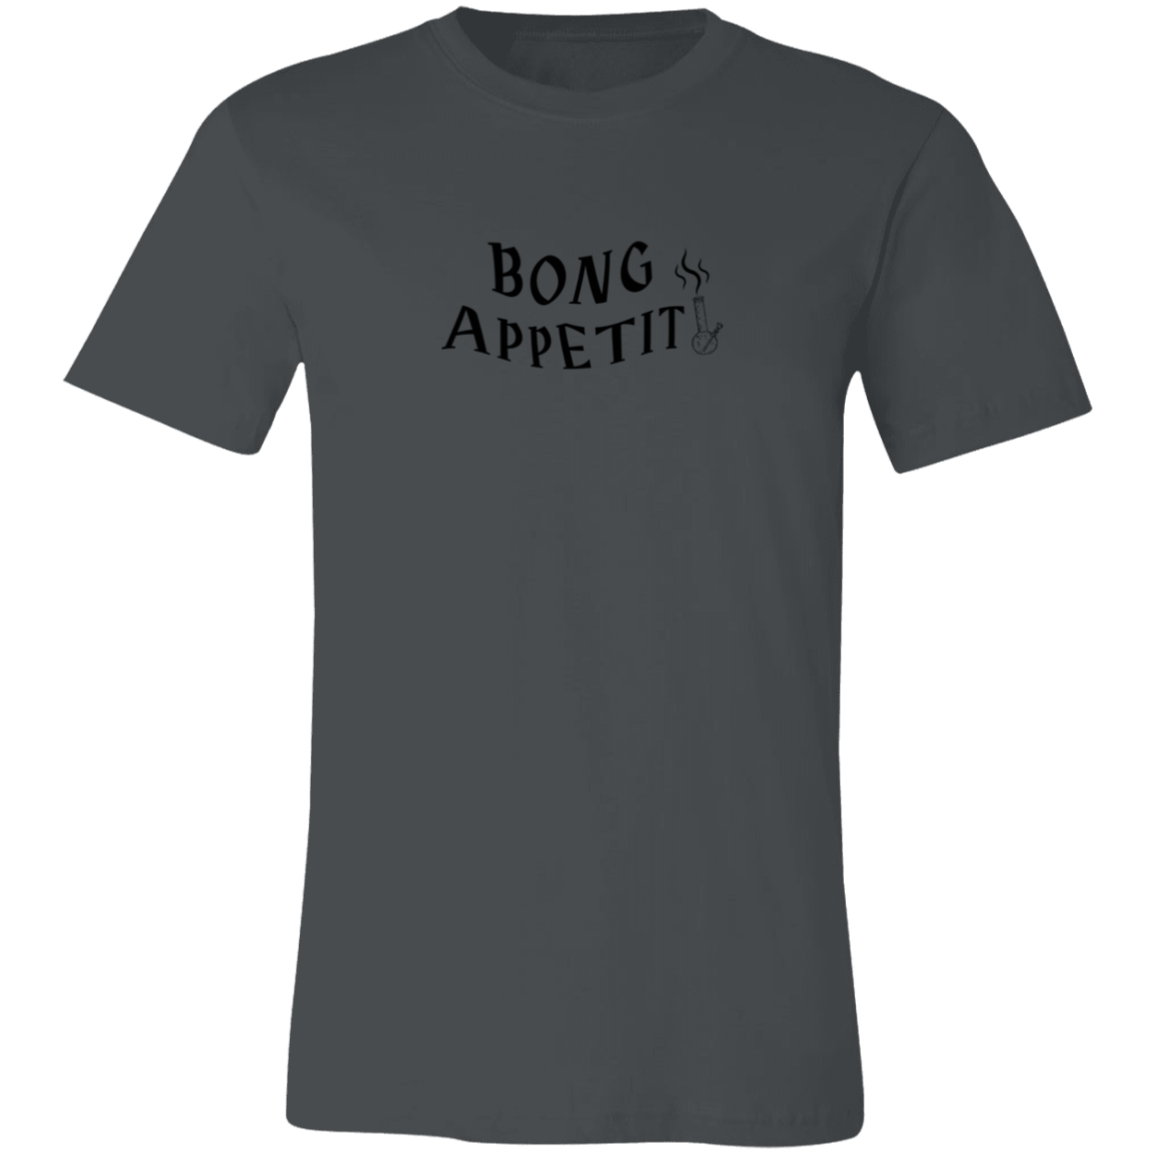 Bong Appetit Shirt